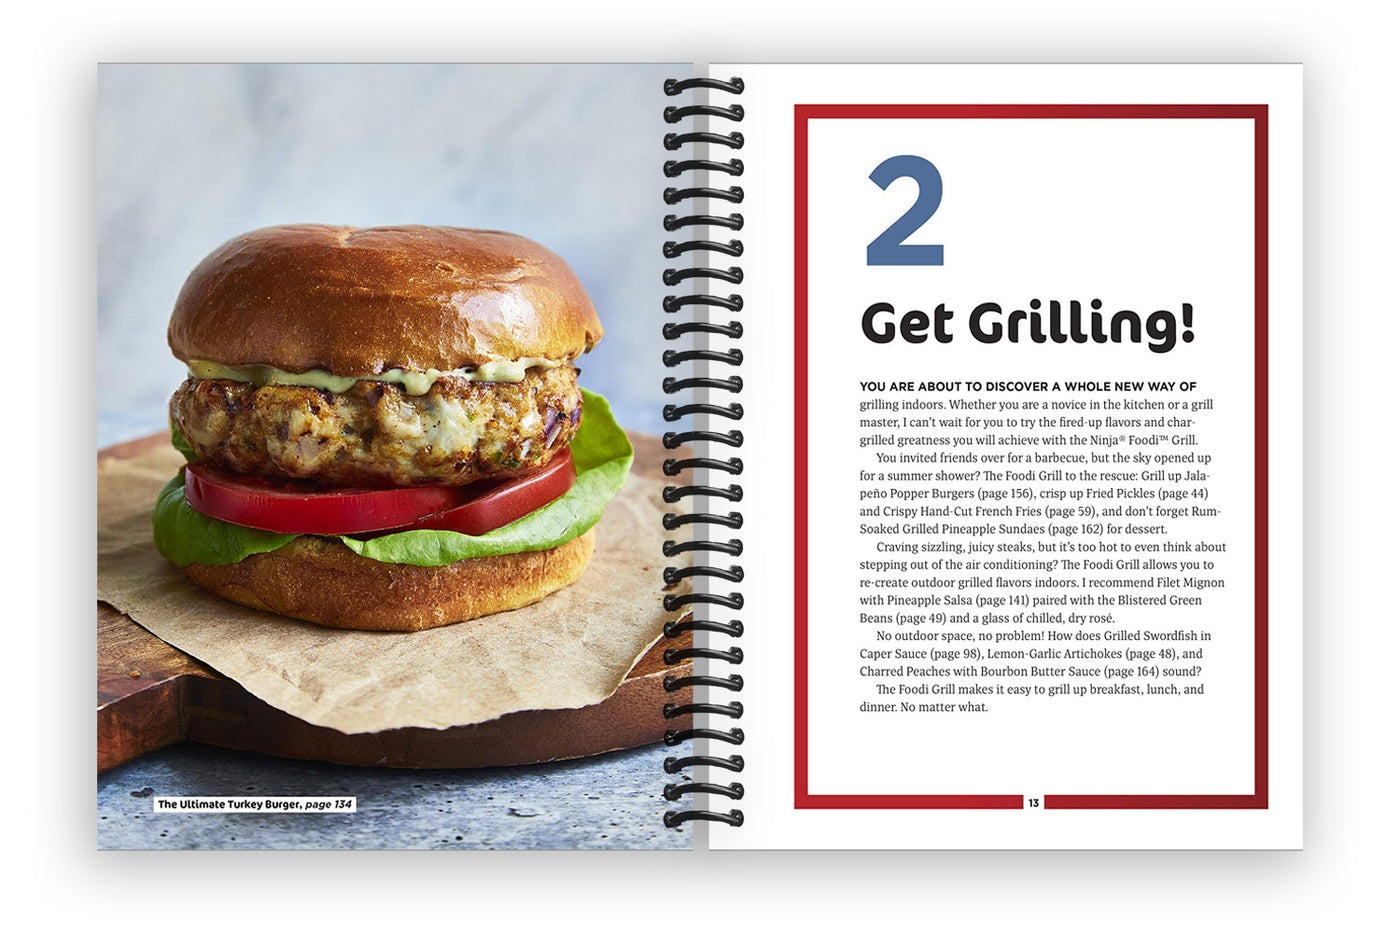 Ninja Foodi Smart XL Grill Cookbook: 600 Easy & Delicious Ninja Foodi Smart  XL Grill Recipes For Indoor Grilling & Air Frying (Paperback)